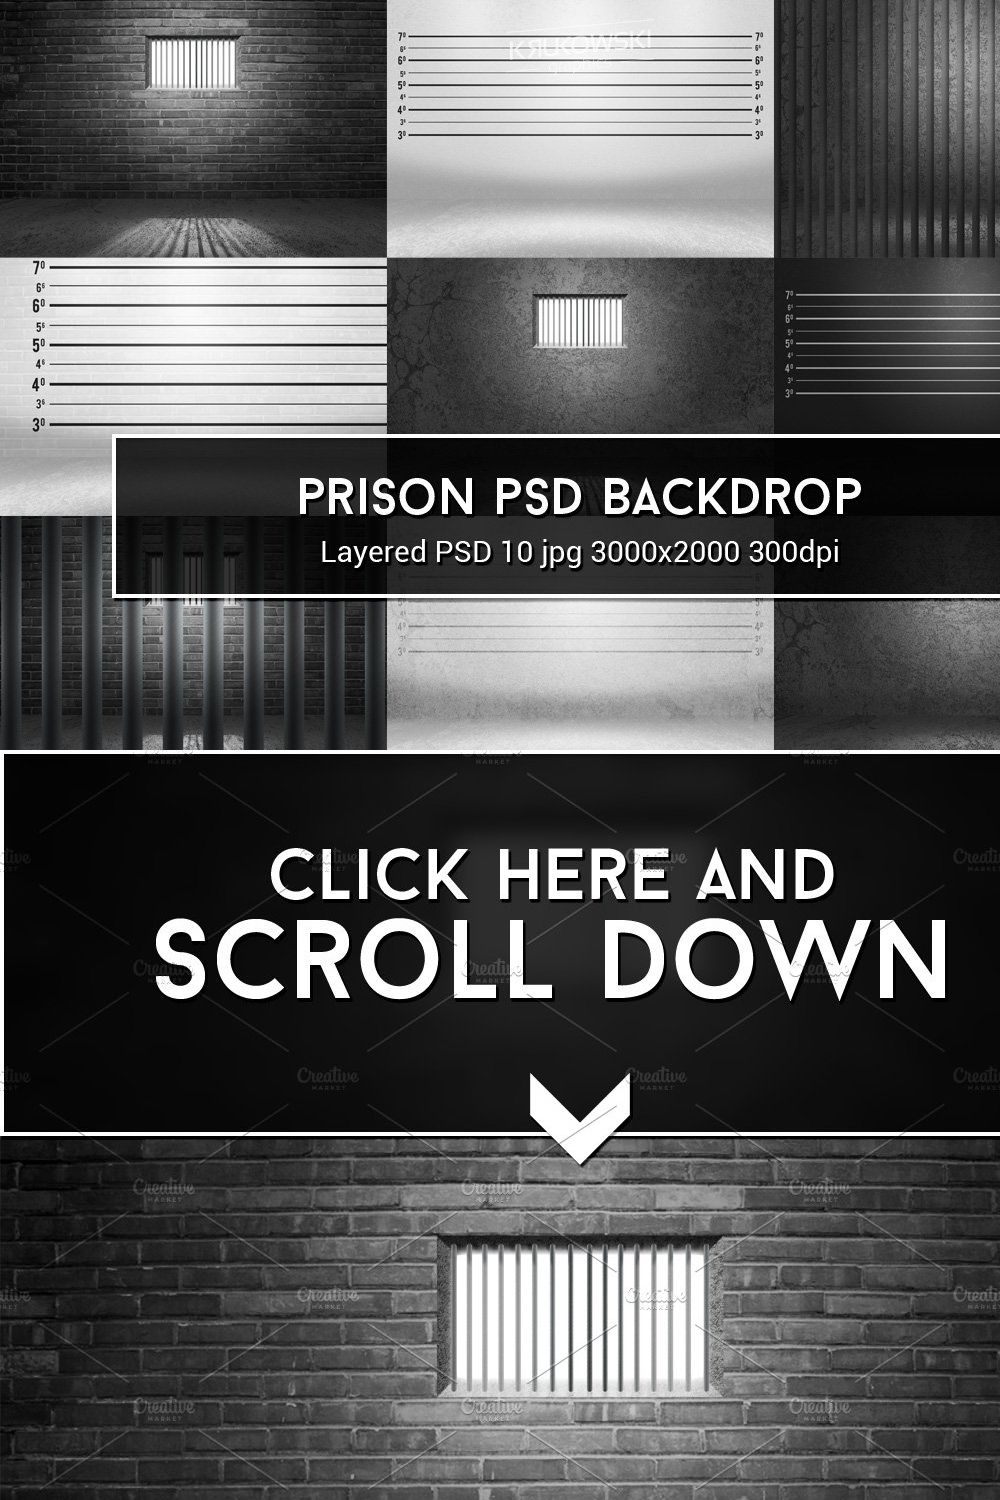 Prison PSD Backdrop pinterest preview image.